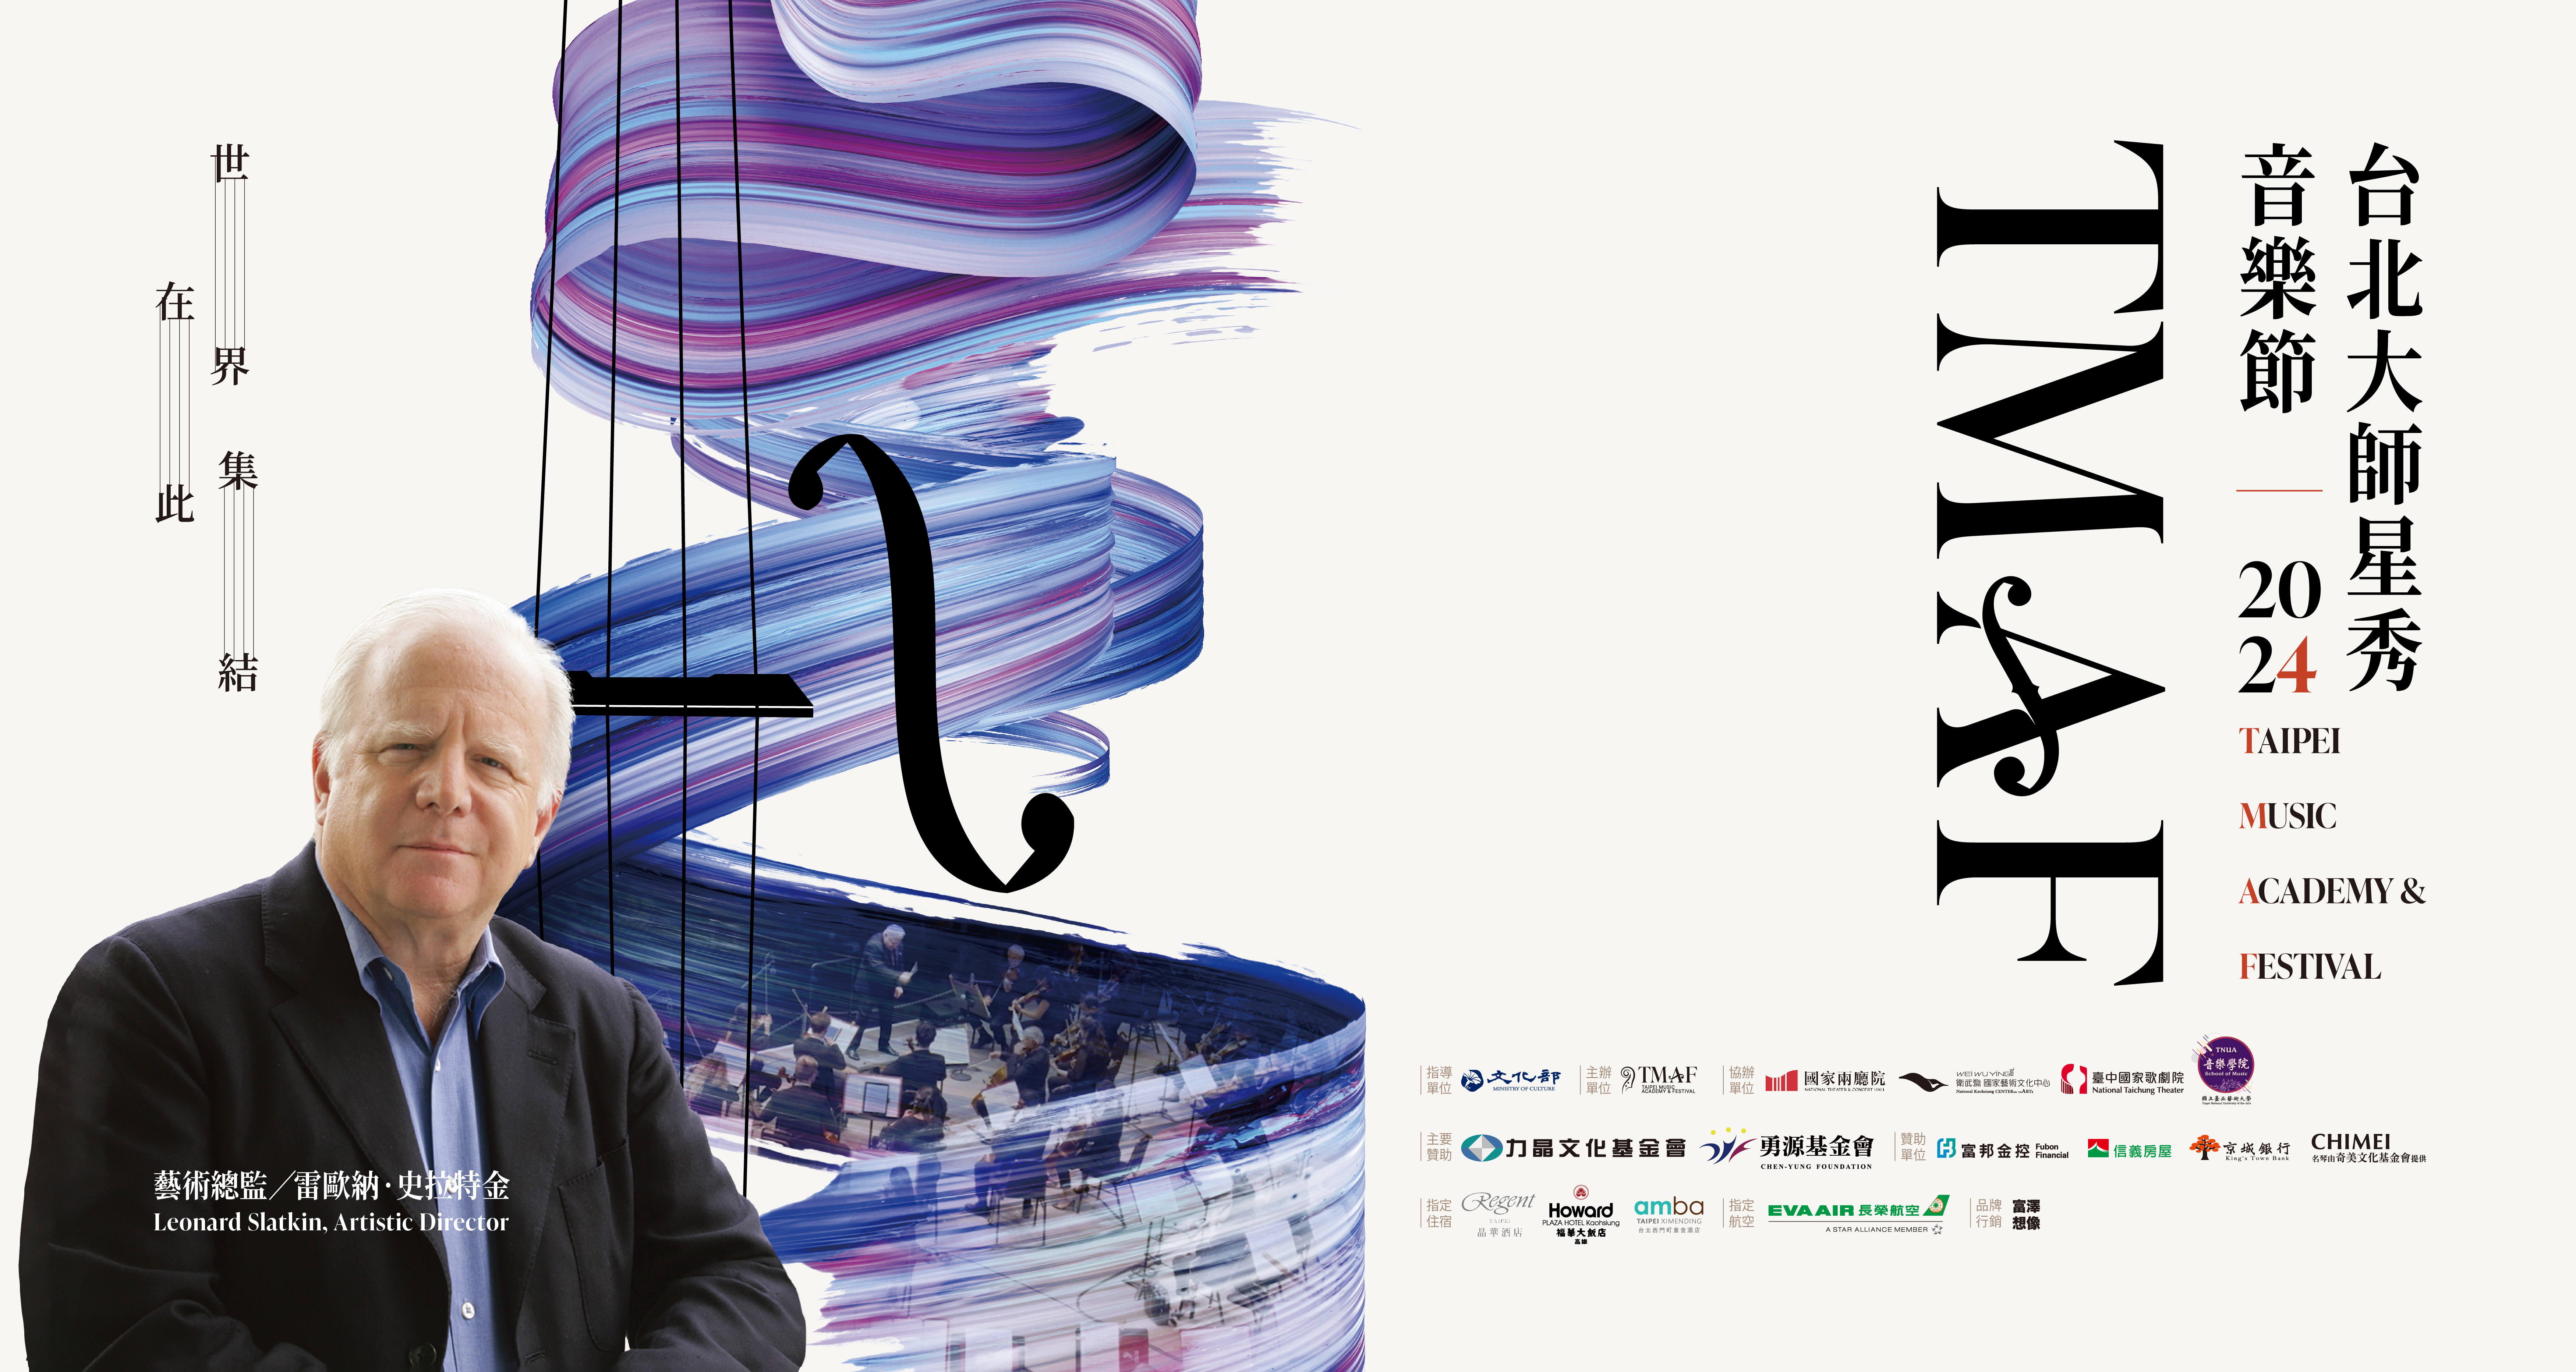 2024 Taipei Music Academy & Festival are now on sale!!